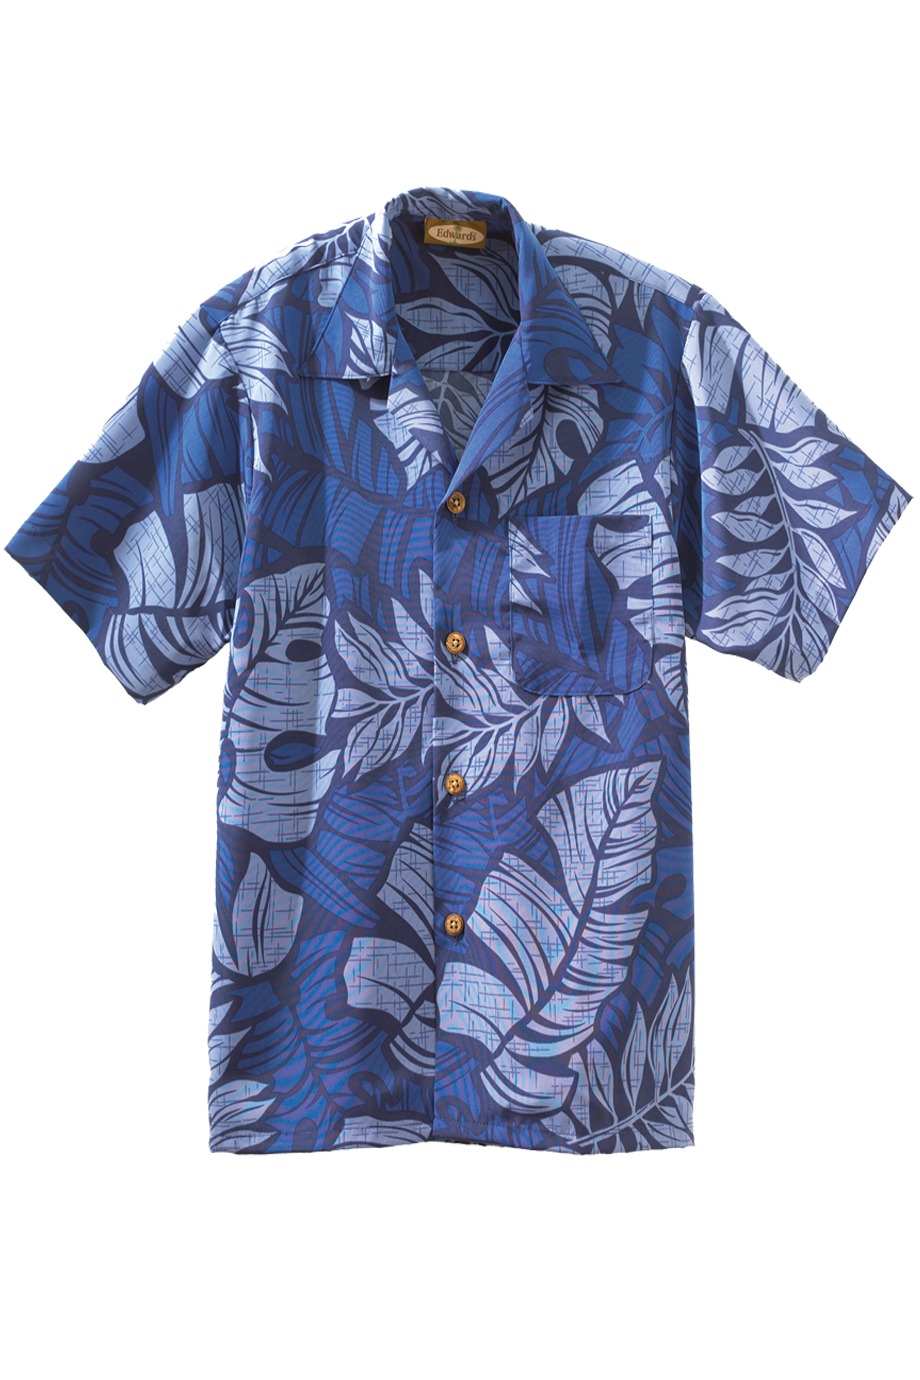 Edwards Garment 1018 - South Seas Leaf Print Camp Shirt